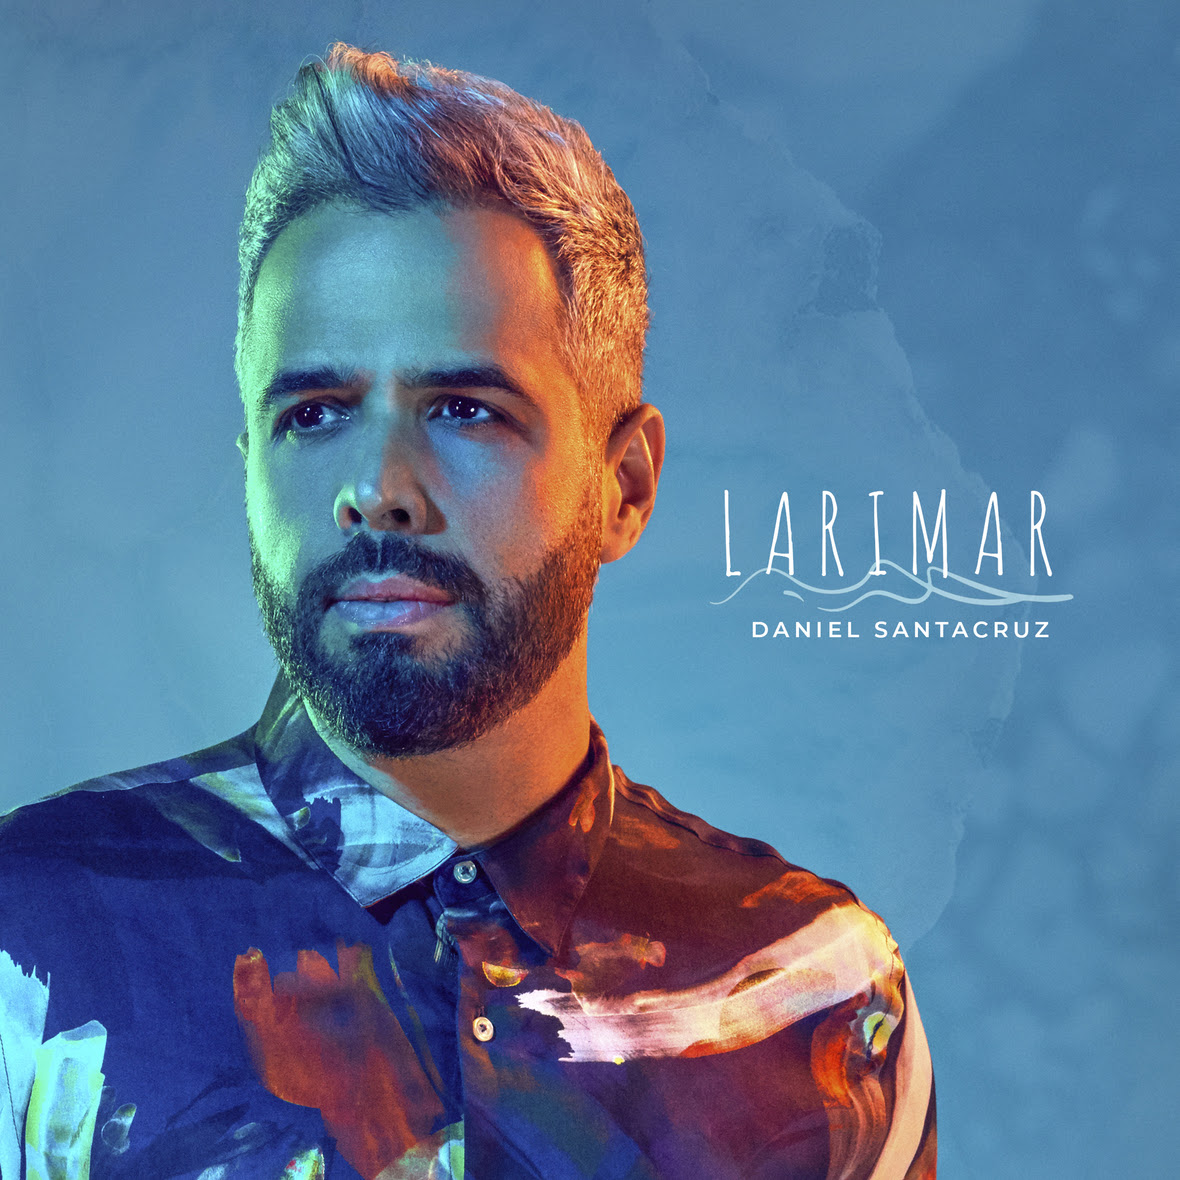 Daniel Santacruz gana Latin Grammy con "Larimar"